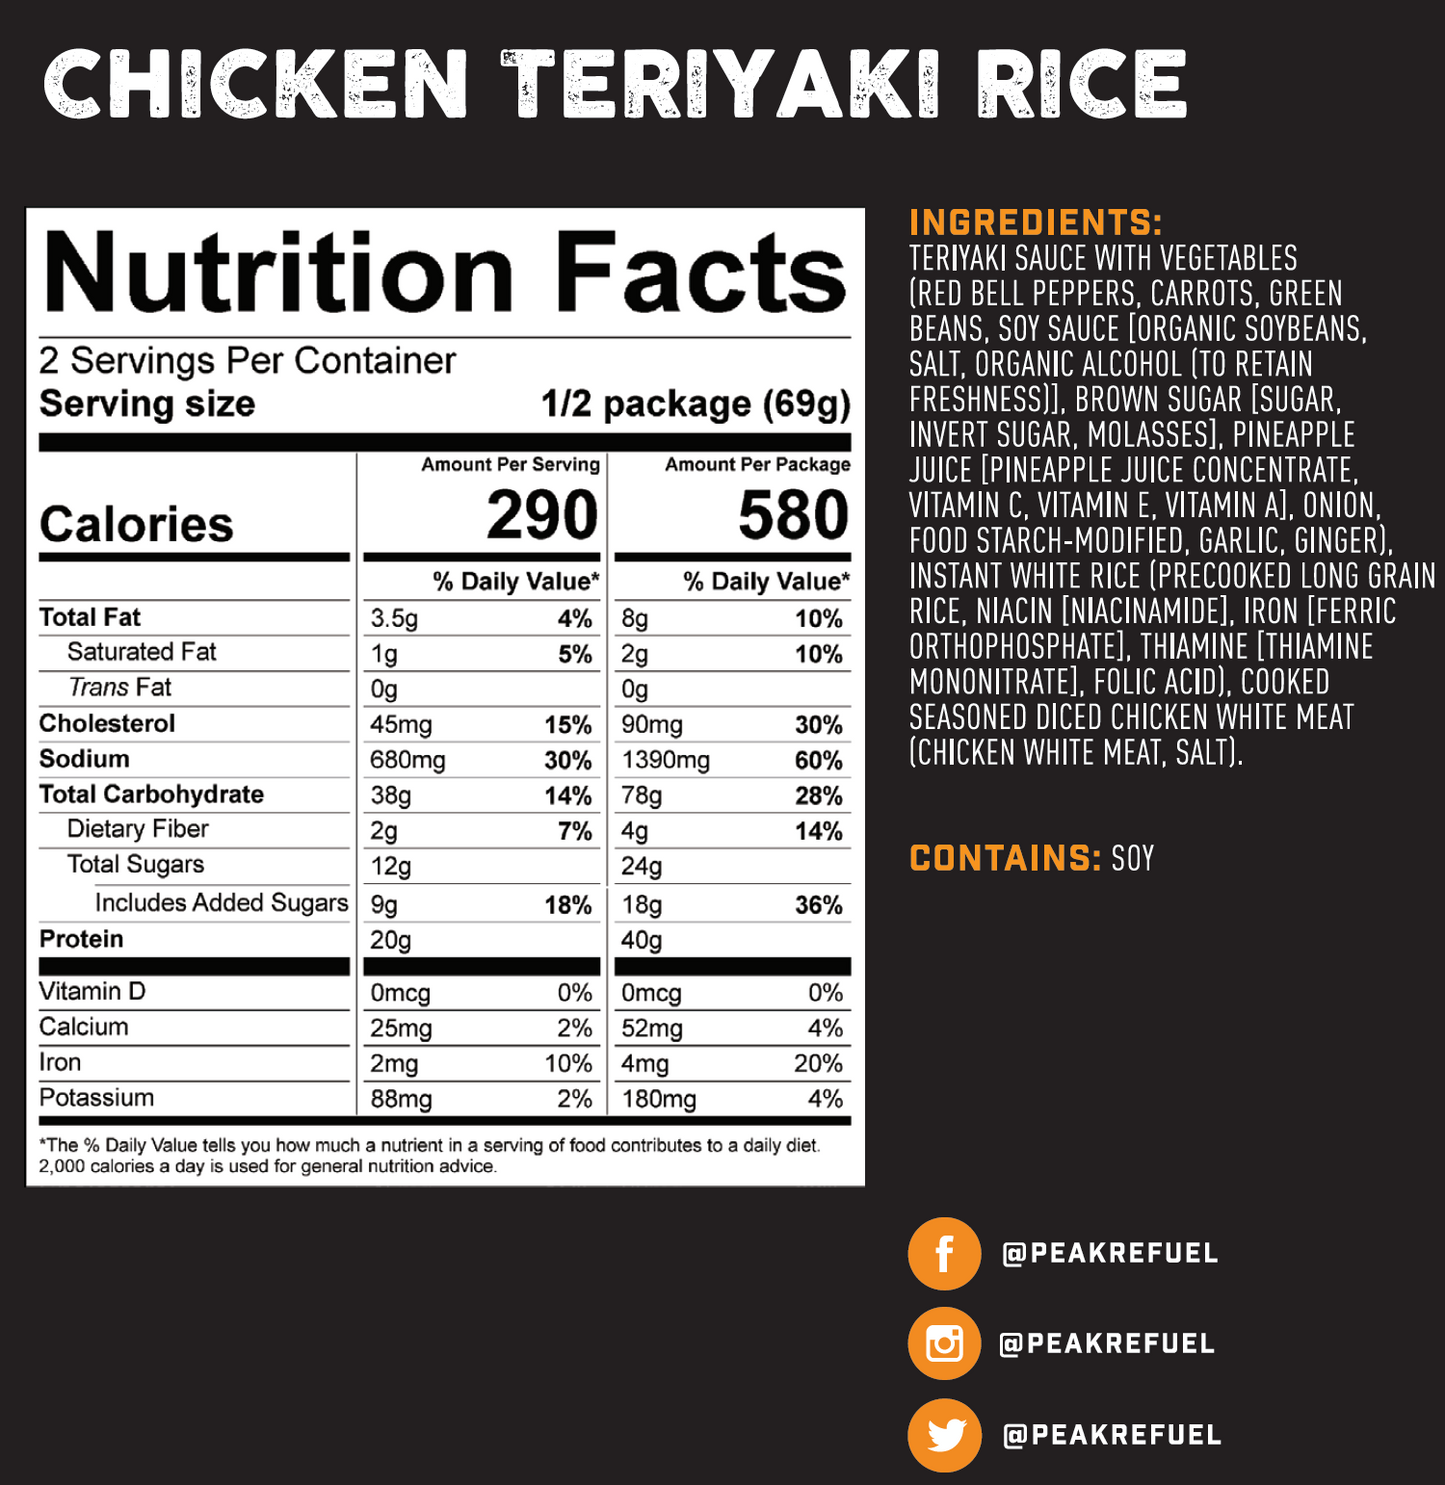 Chicken Teriyaki Rice by Peak Refuel